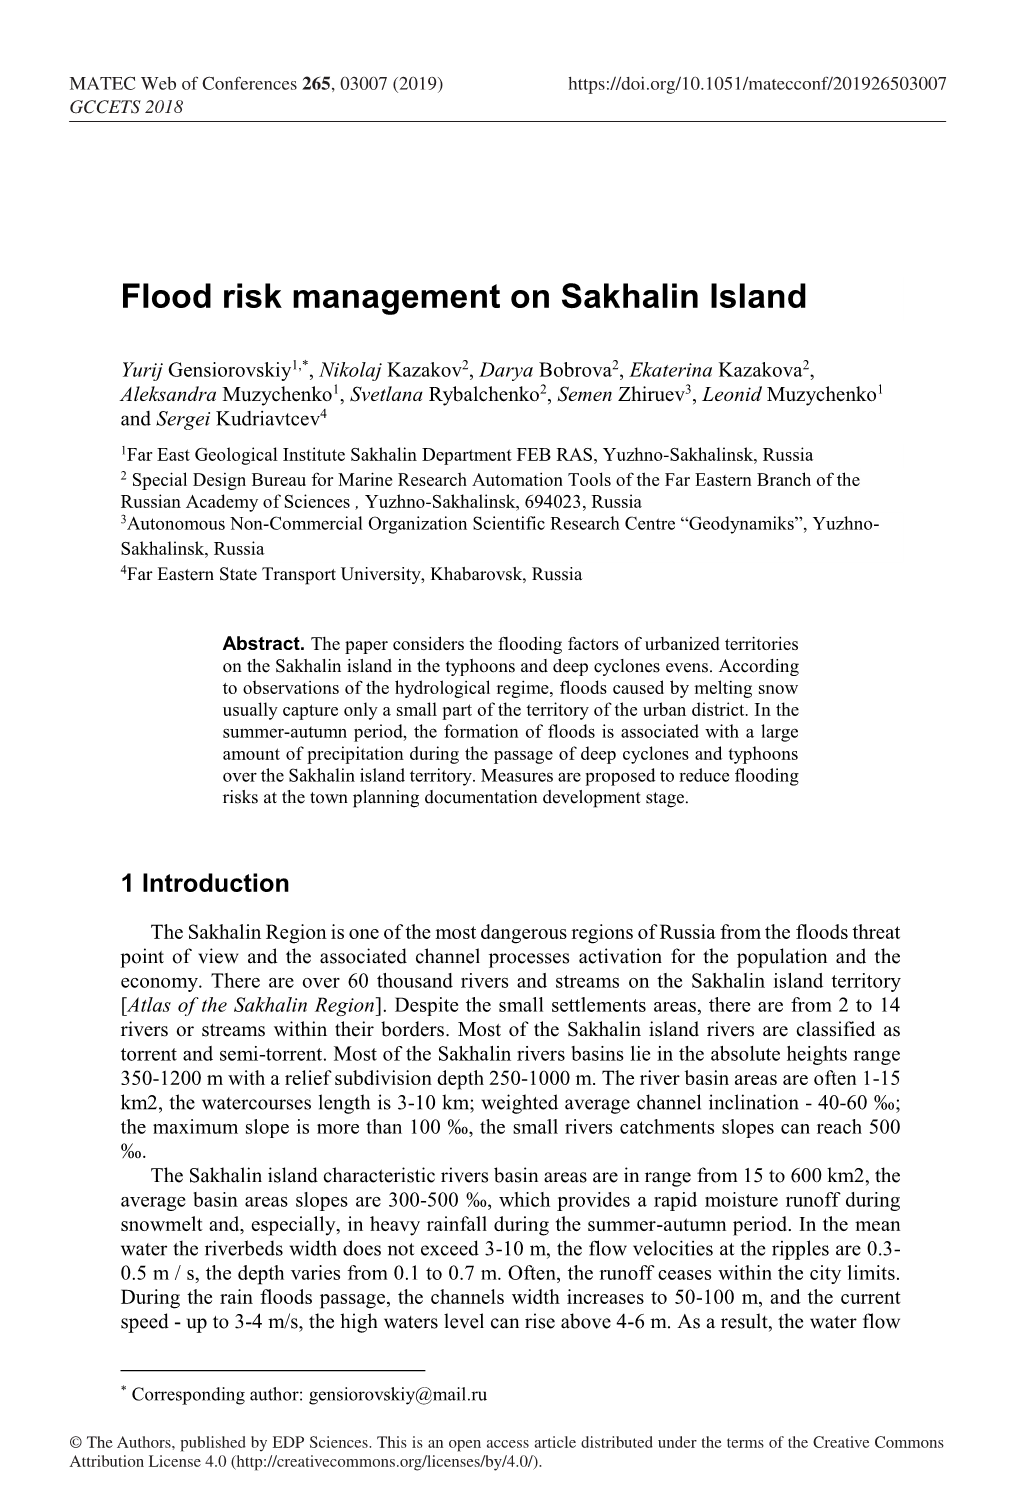 Flood Risk Management on Sakhalin Island